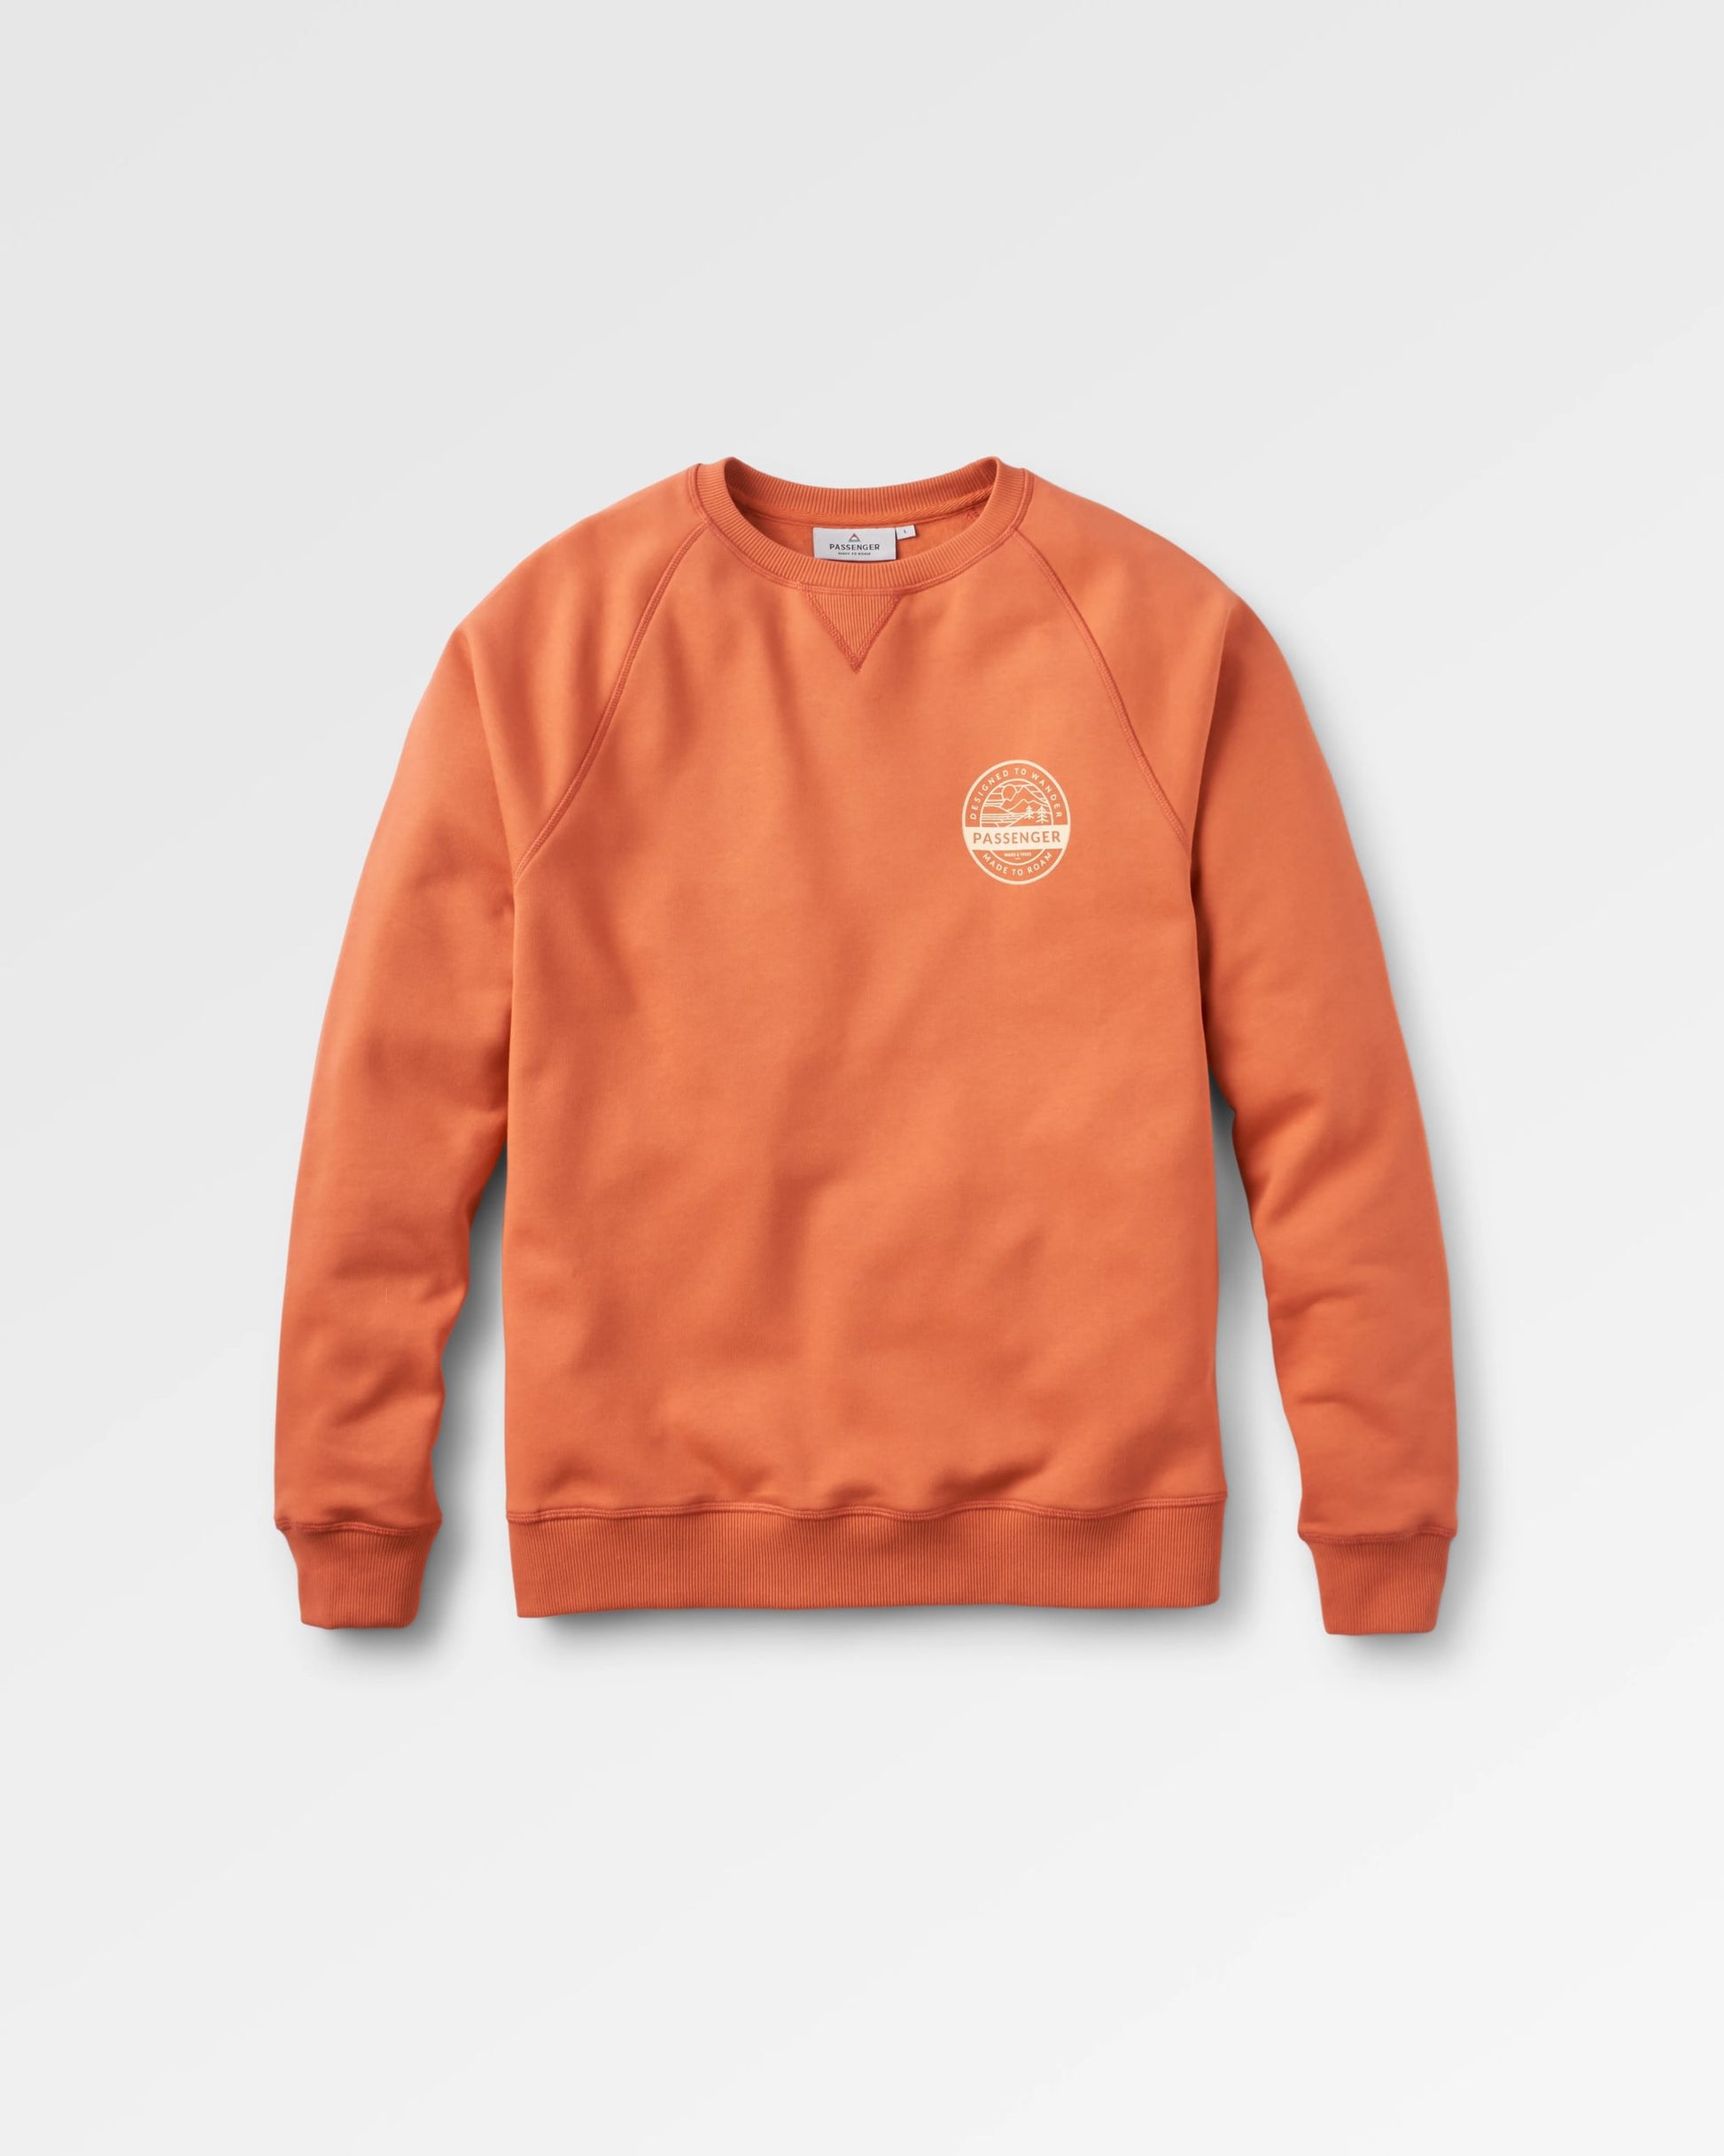 Odyssey Organic Cotton Sweatshirt - Burnt Orange